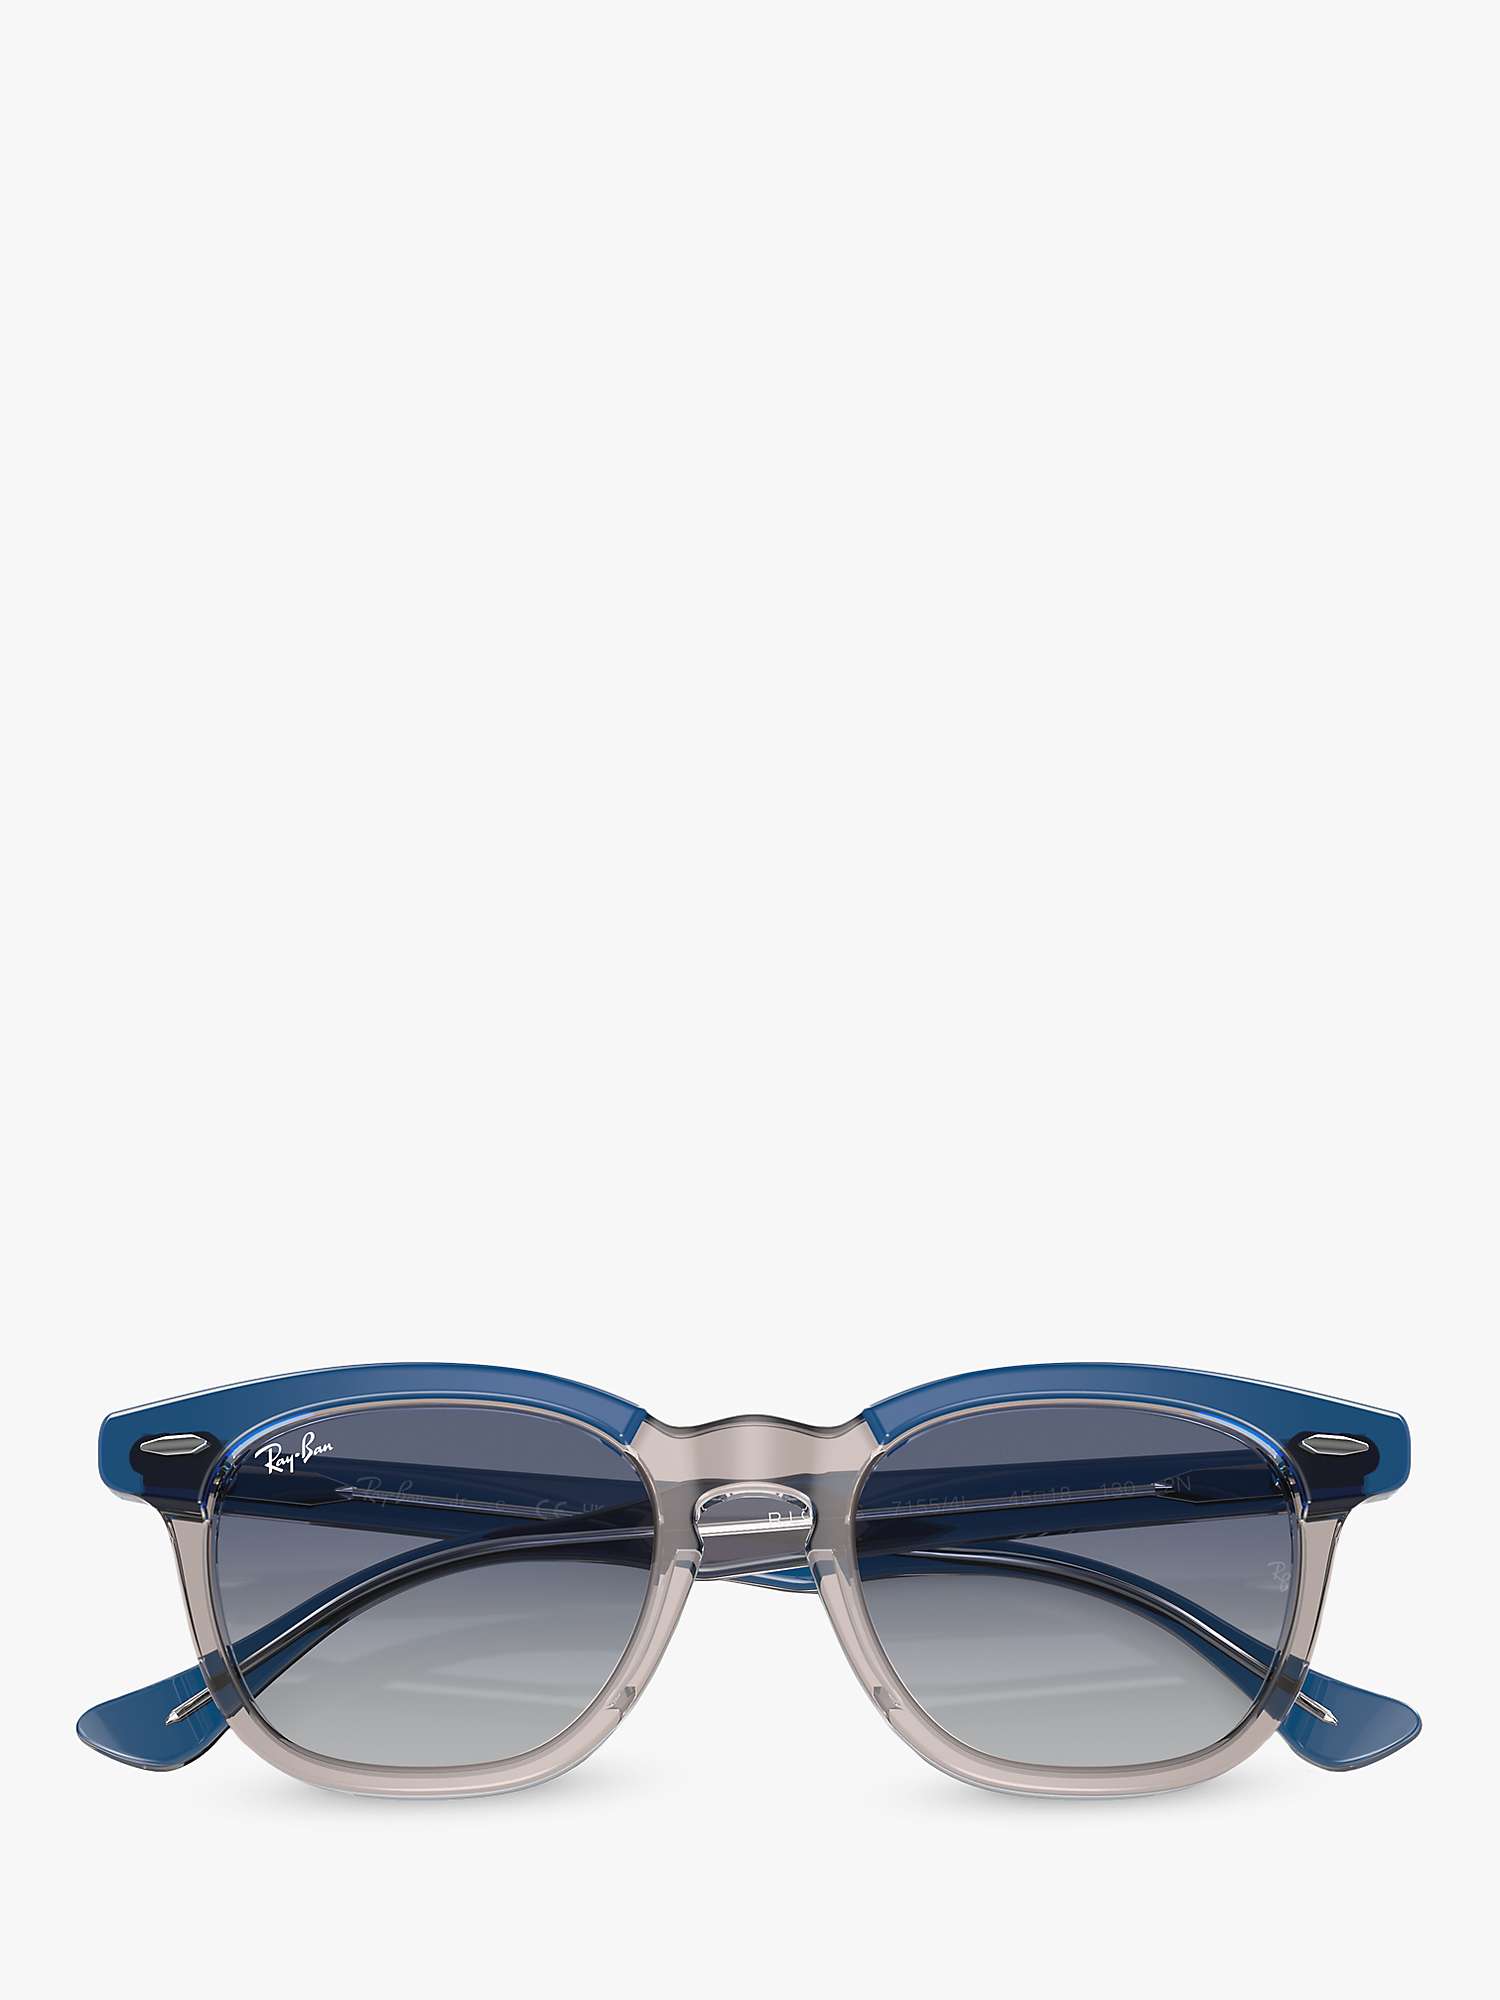 Buy Ray-Ban RJ9098S Unisex D-Frame Sunglasses Online at johnlewis.com